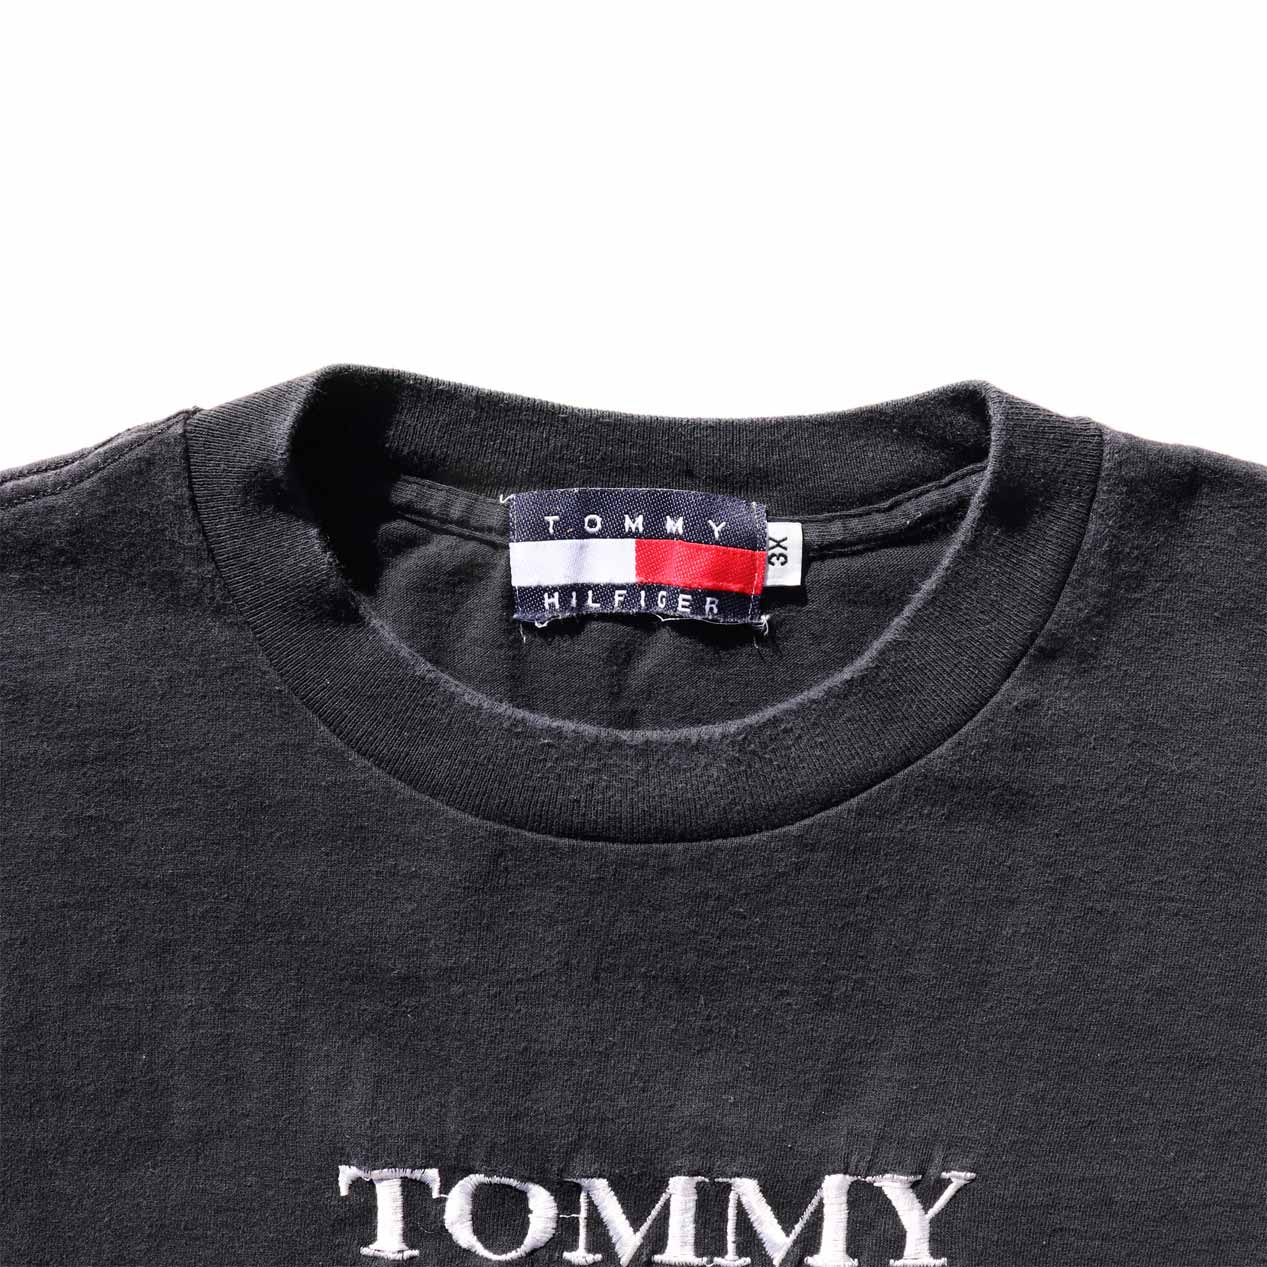 POST JUNK / 90's ブート TOMMY HILFIGER 刺繍ロゴ ワイドTシャツ [3XL]